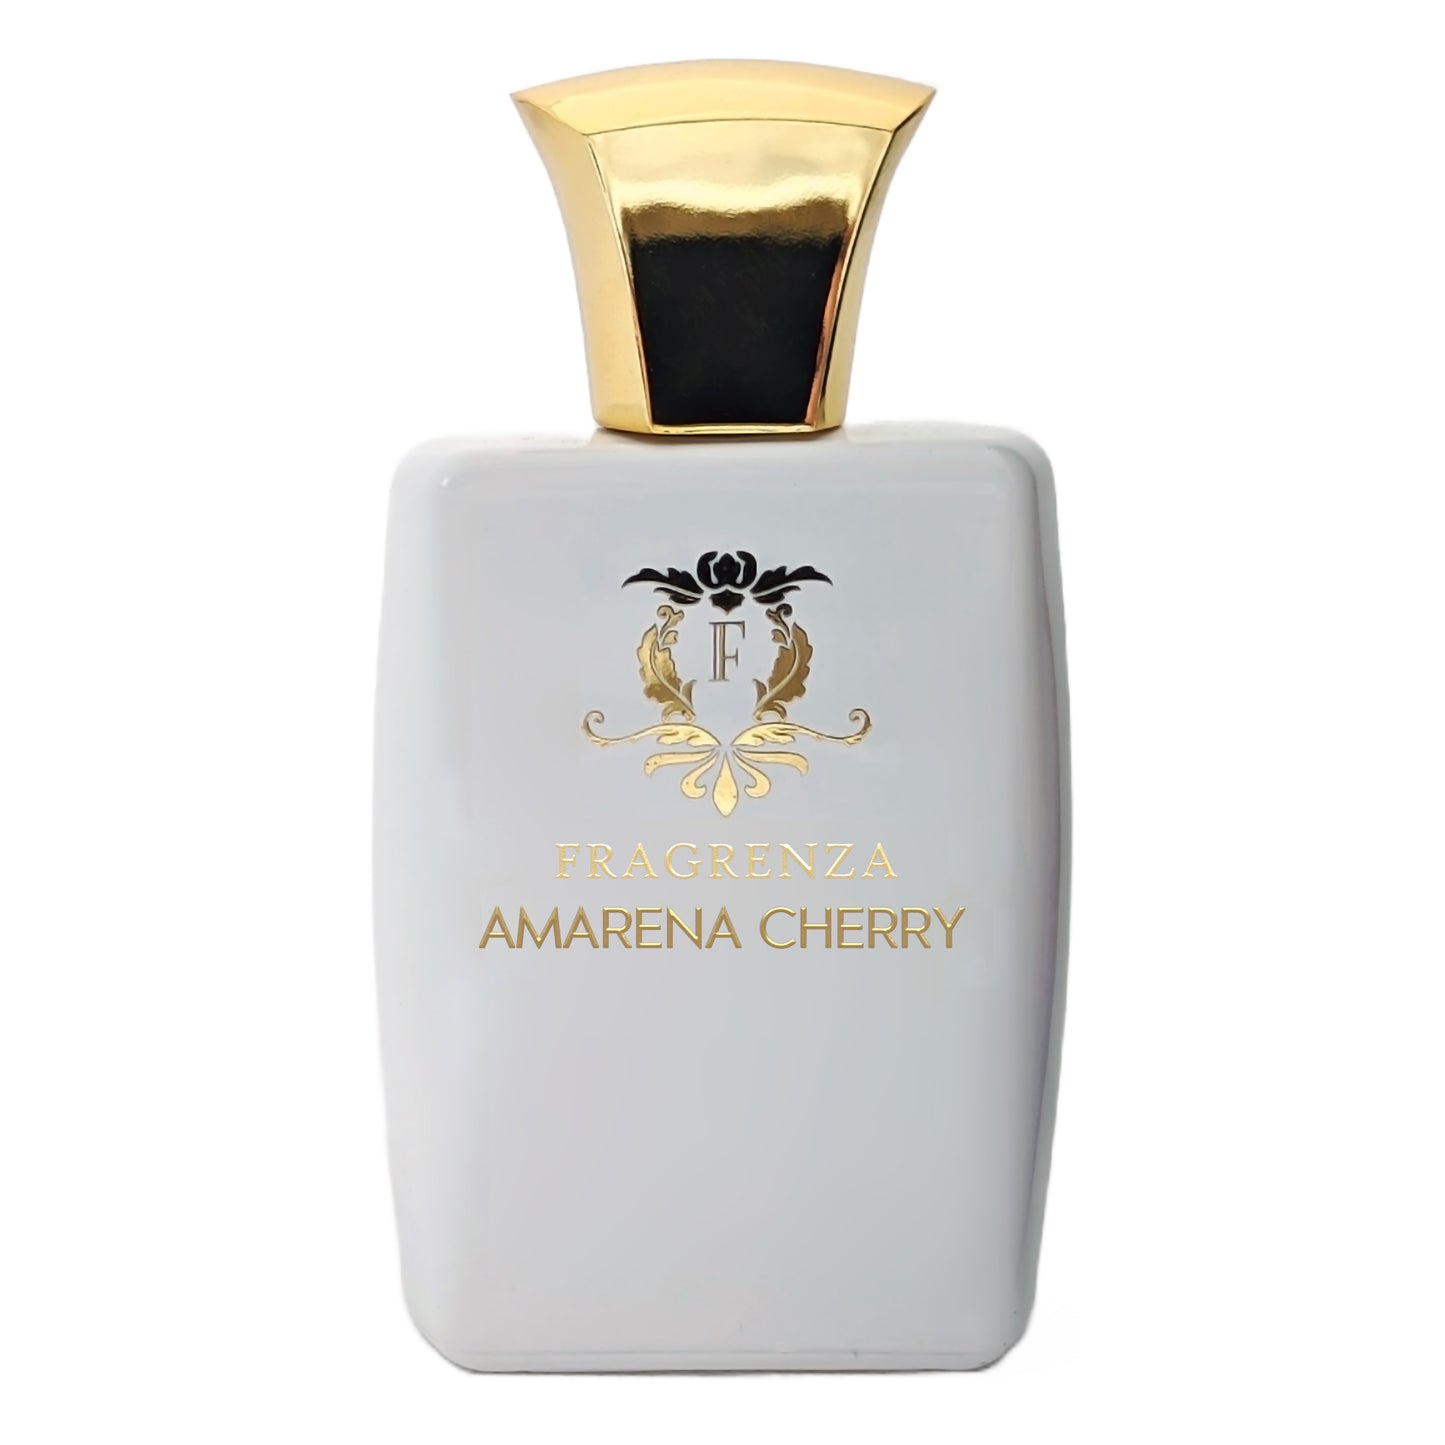 Amarena Cherry